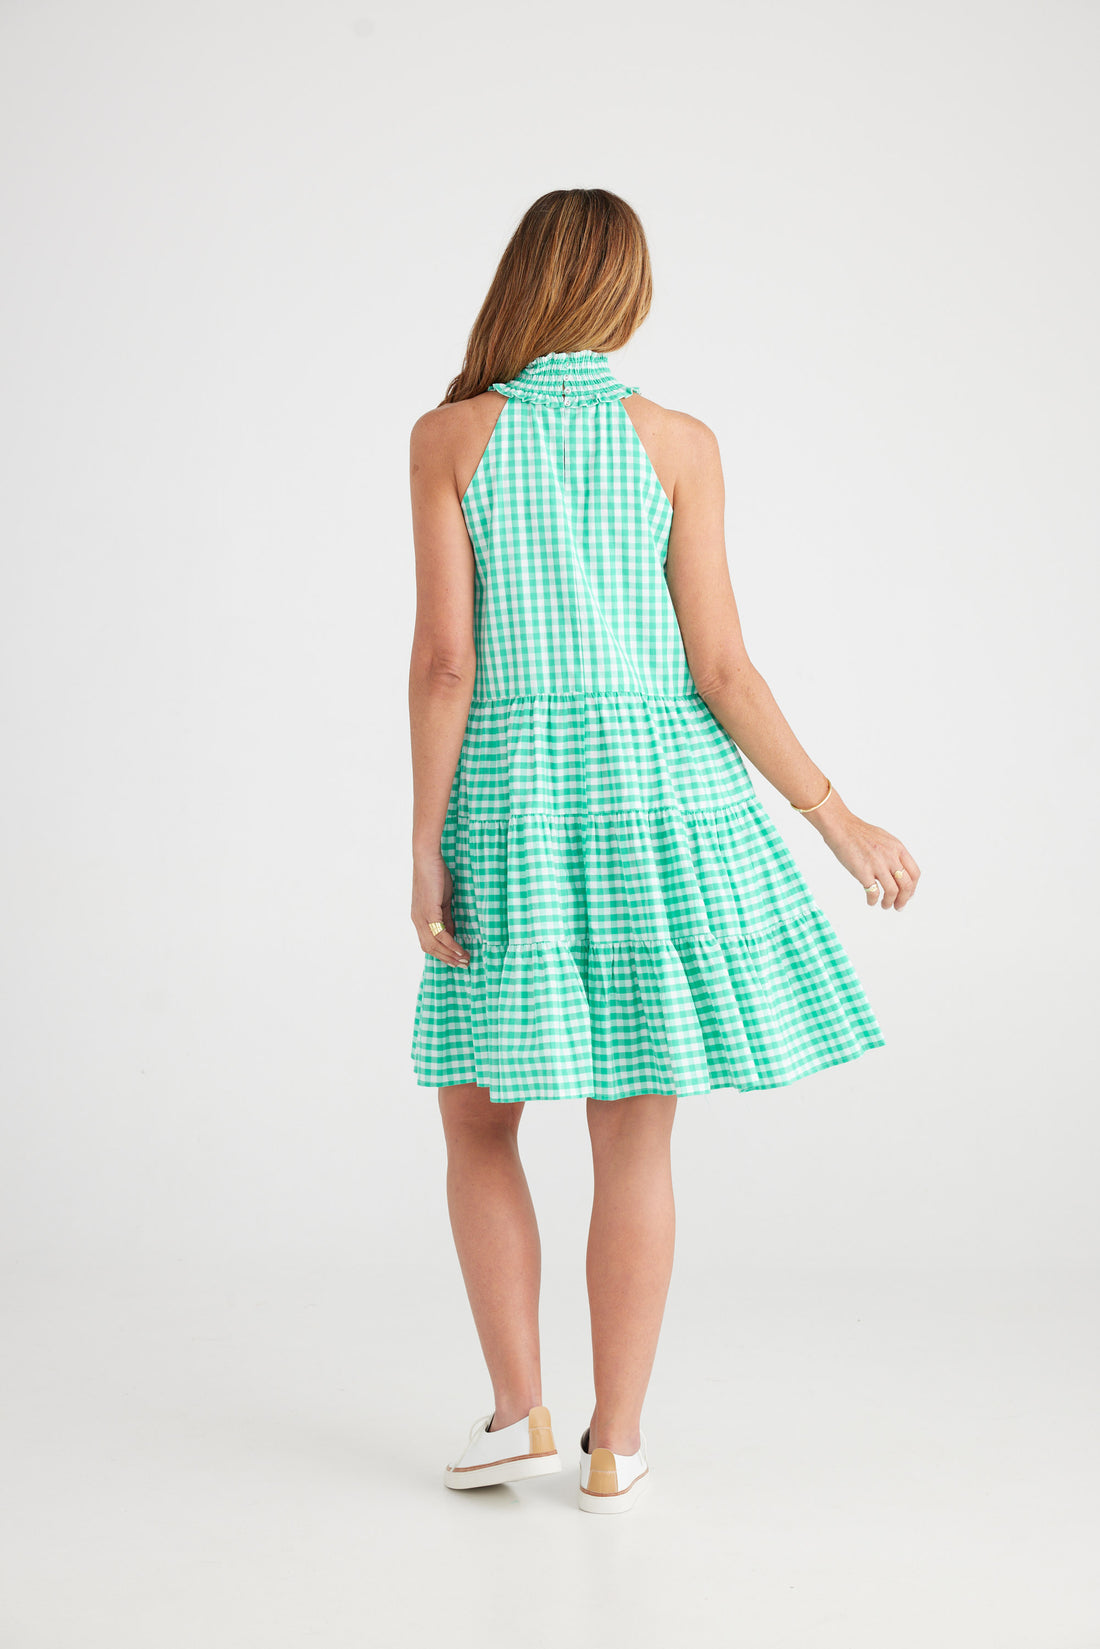 Brave + True - Cleo Dress Mint Gingham | BT7109-2